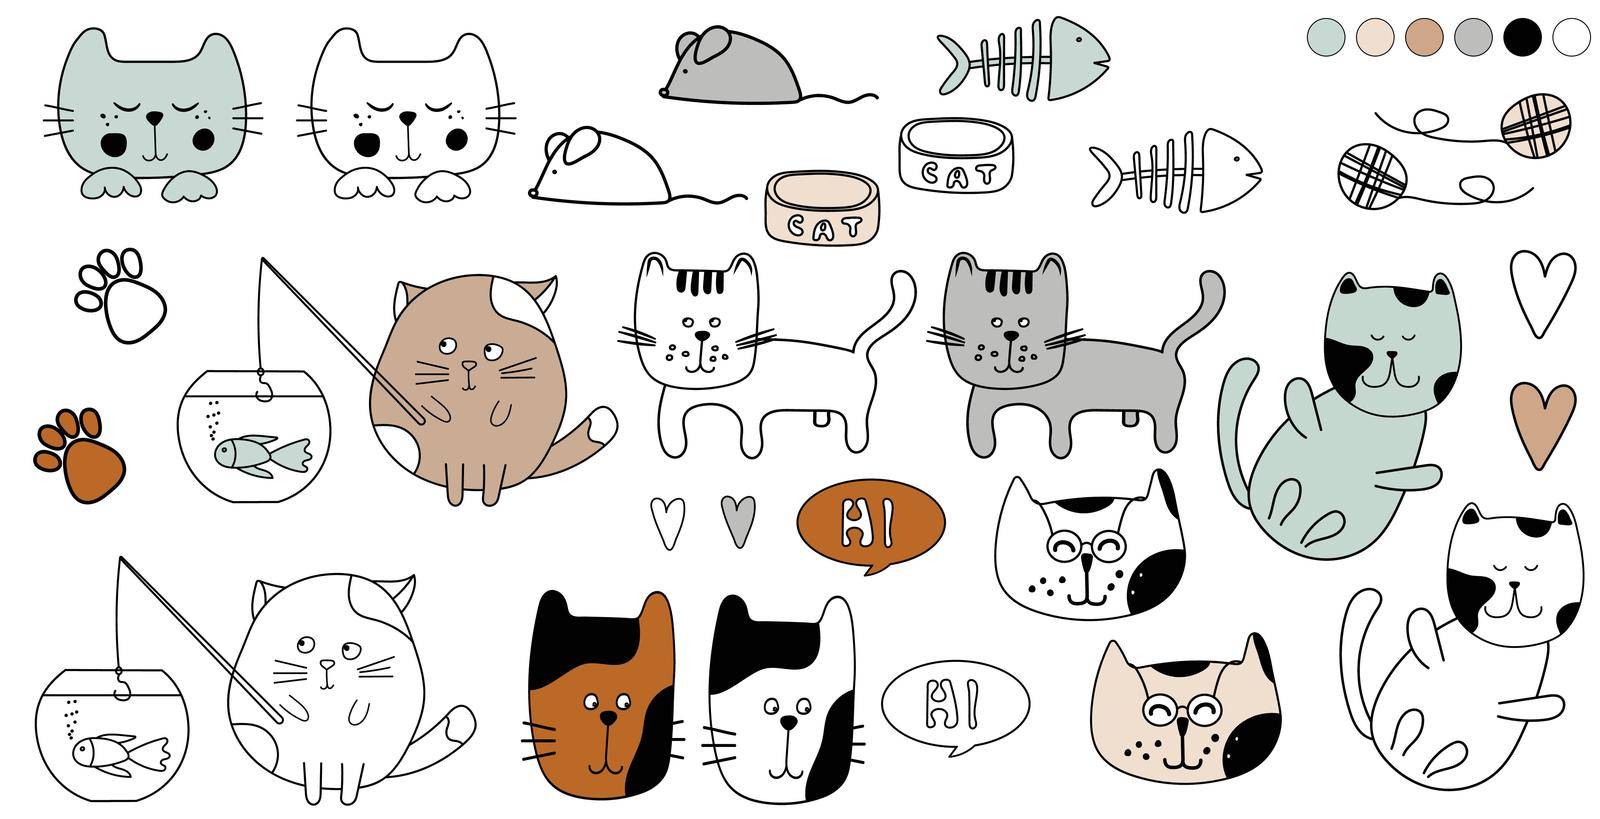 Kitty cats design by tan4ikk1